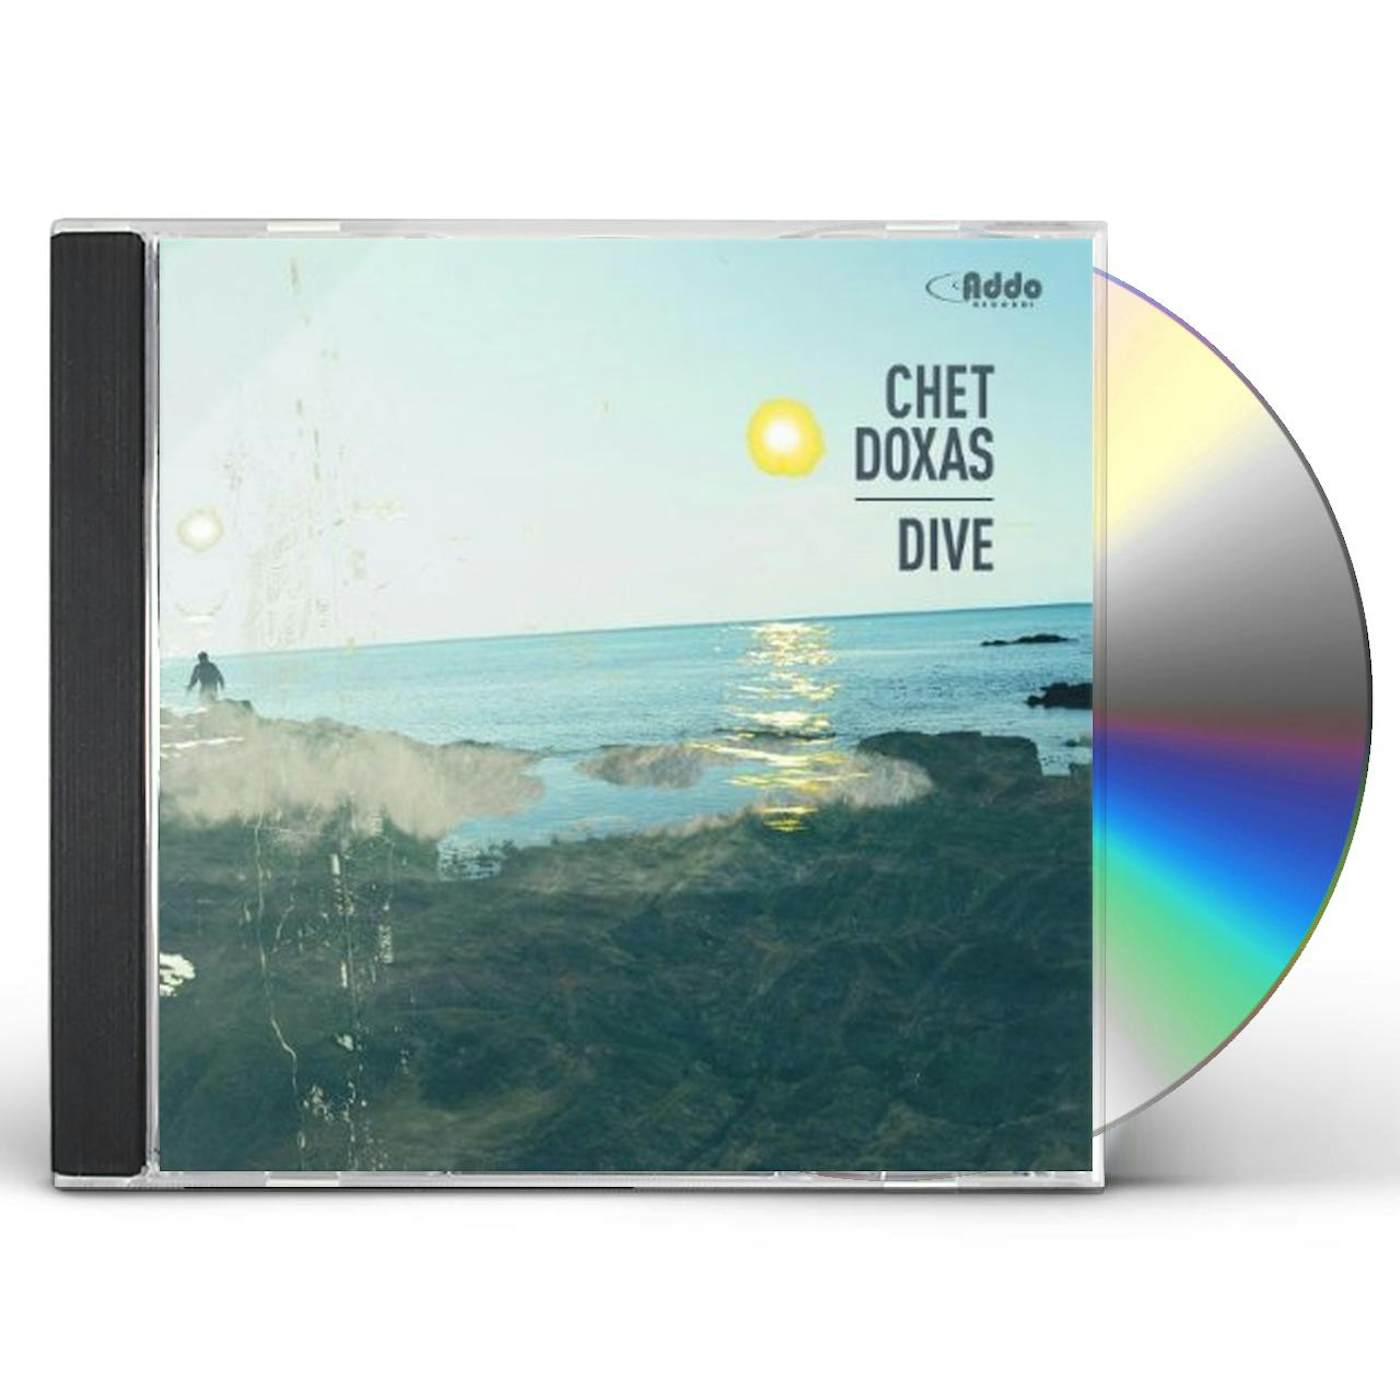 Chet Doxas DIVE CD